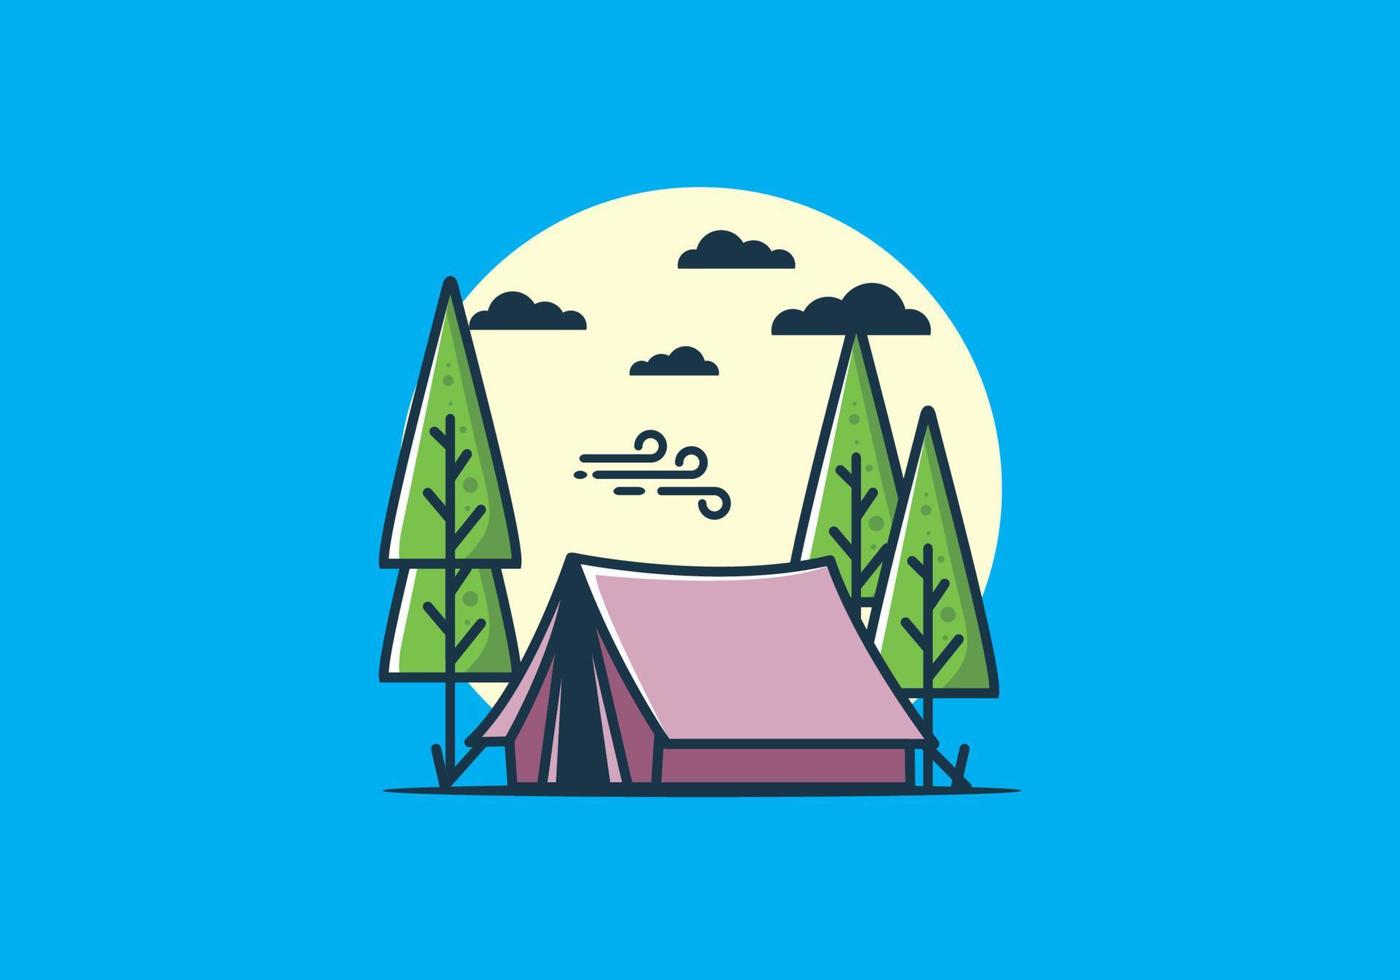 grande tente de camping et illustration de pins vecteur